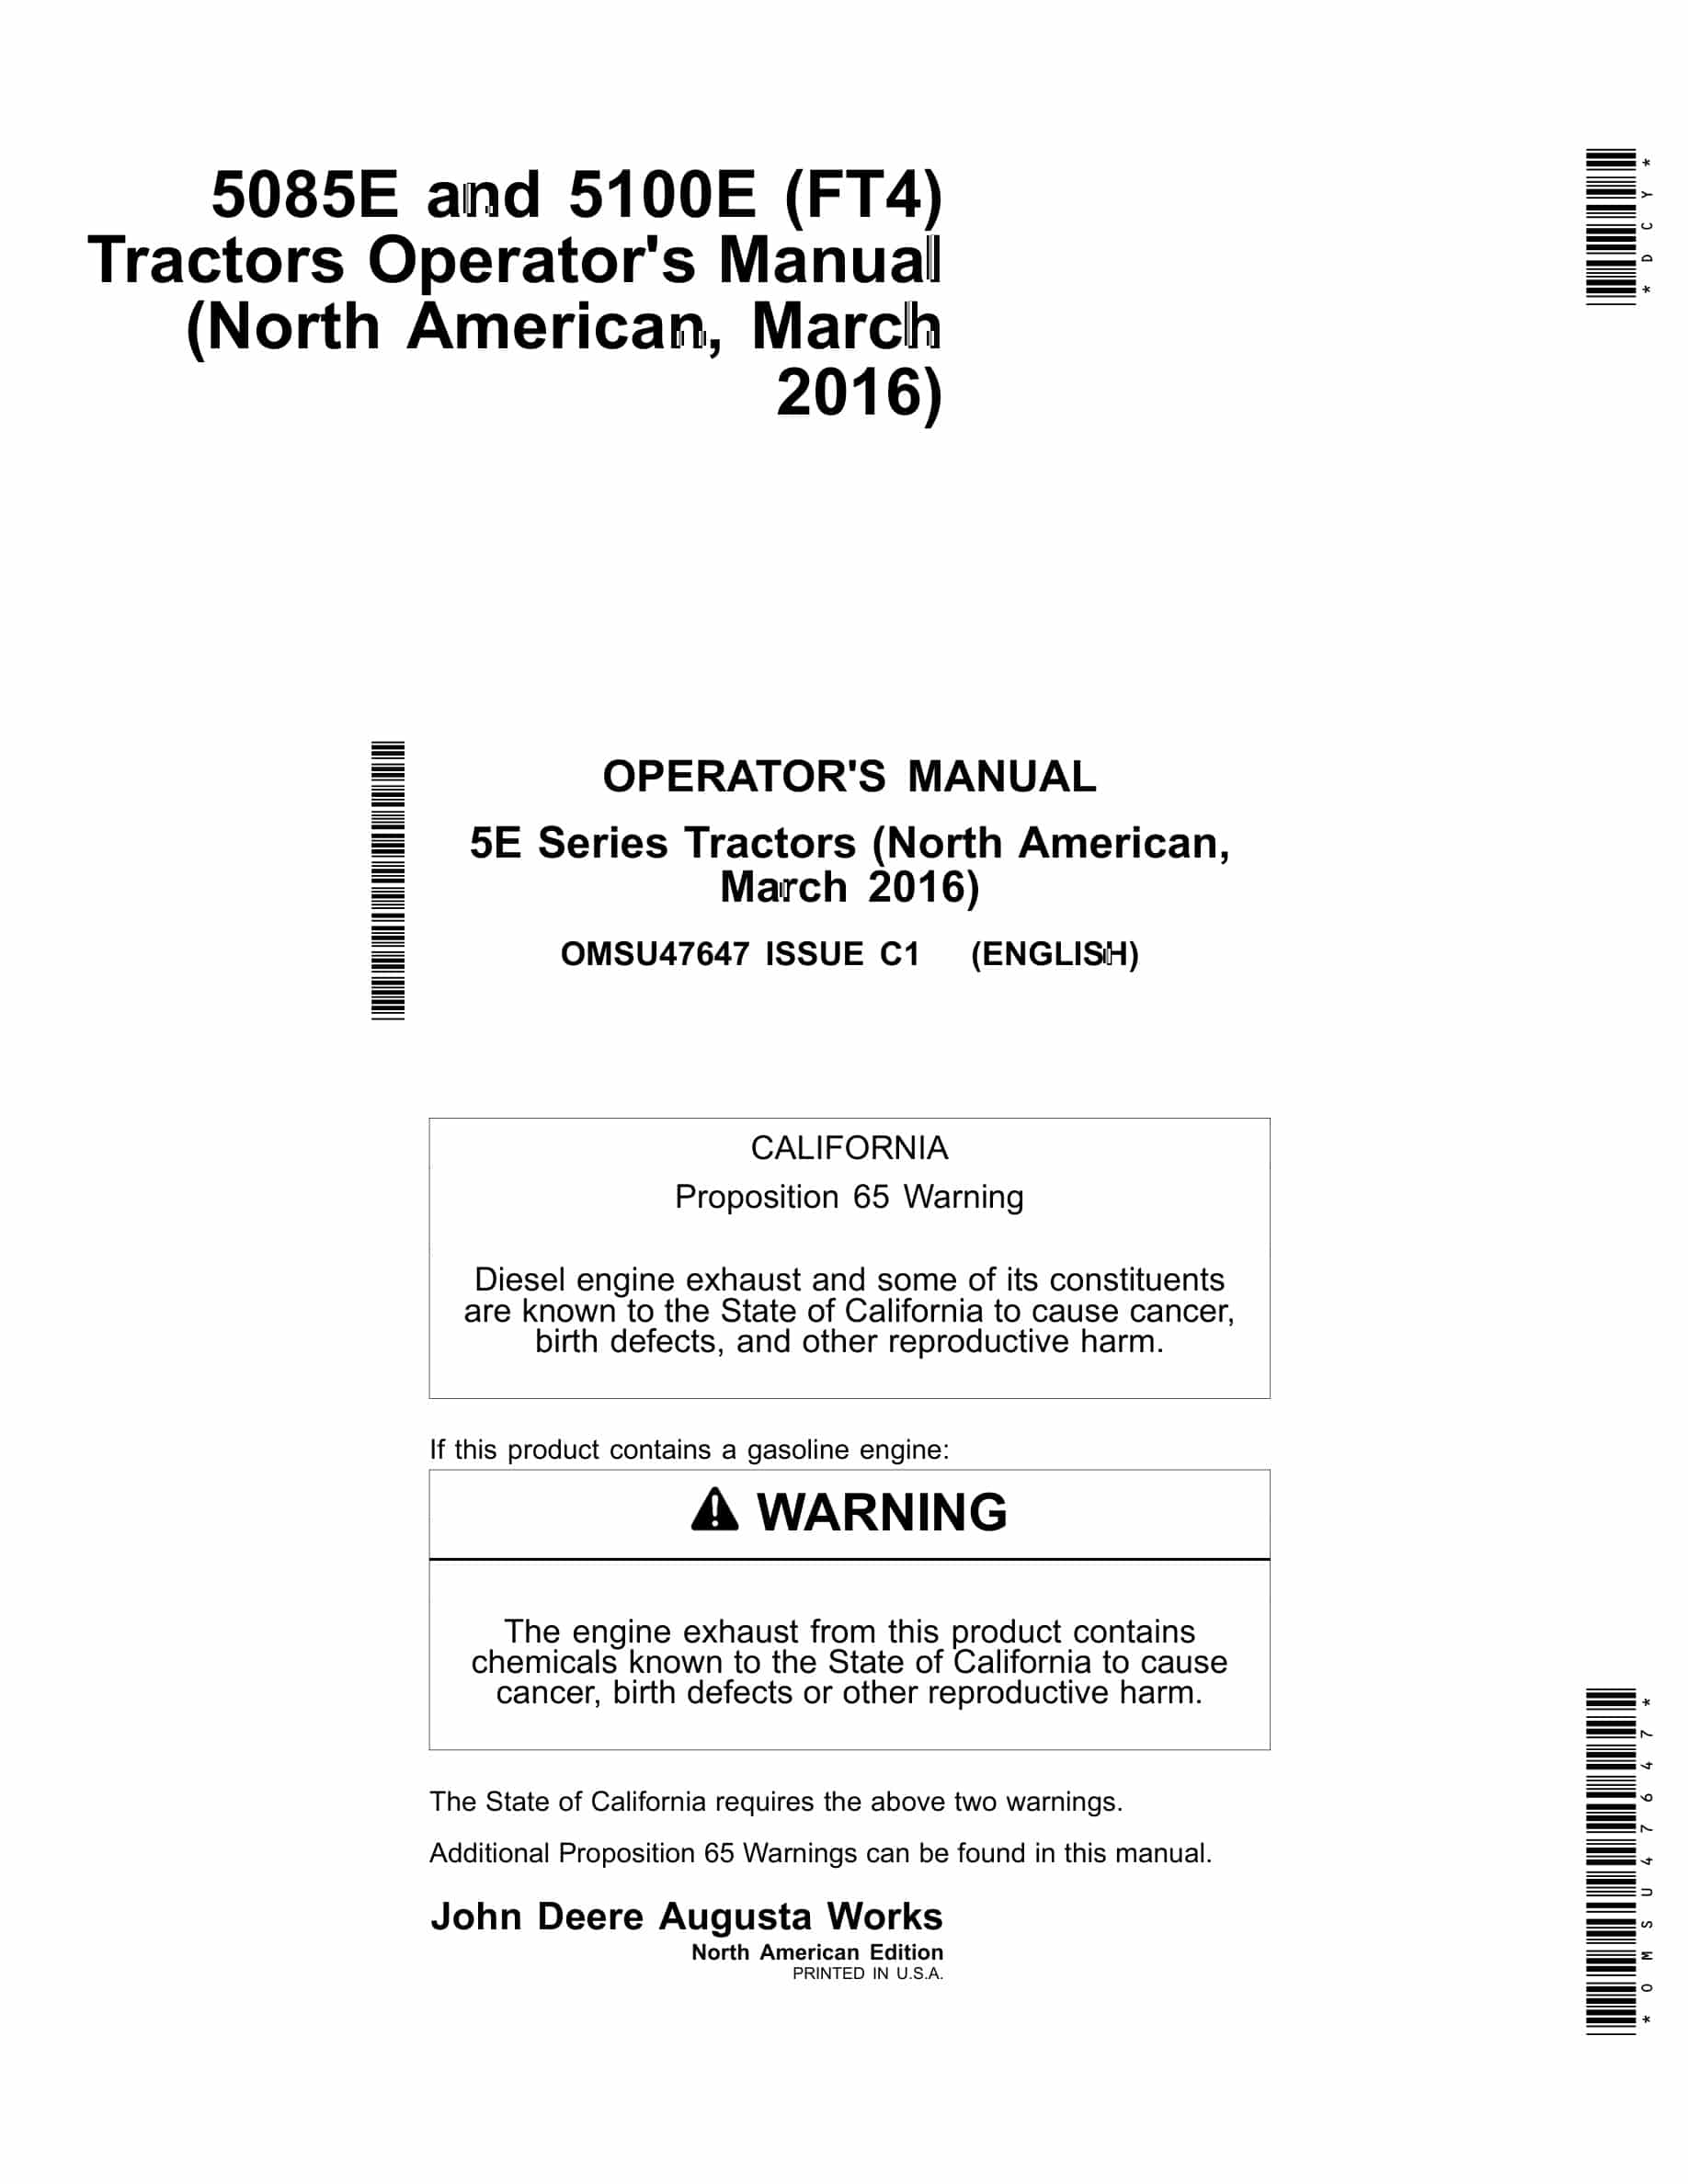 John Deere 5085E and 5100E (FT4) Tractor Operator Manual OMSU47647-1